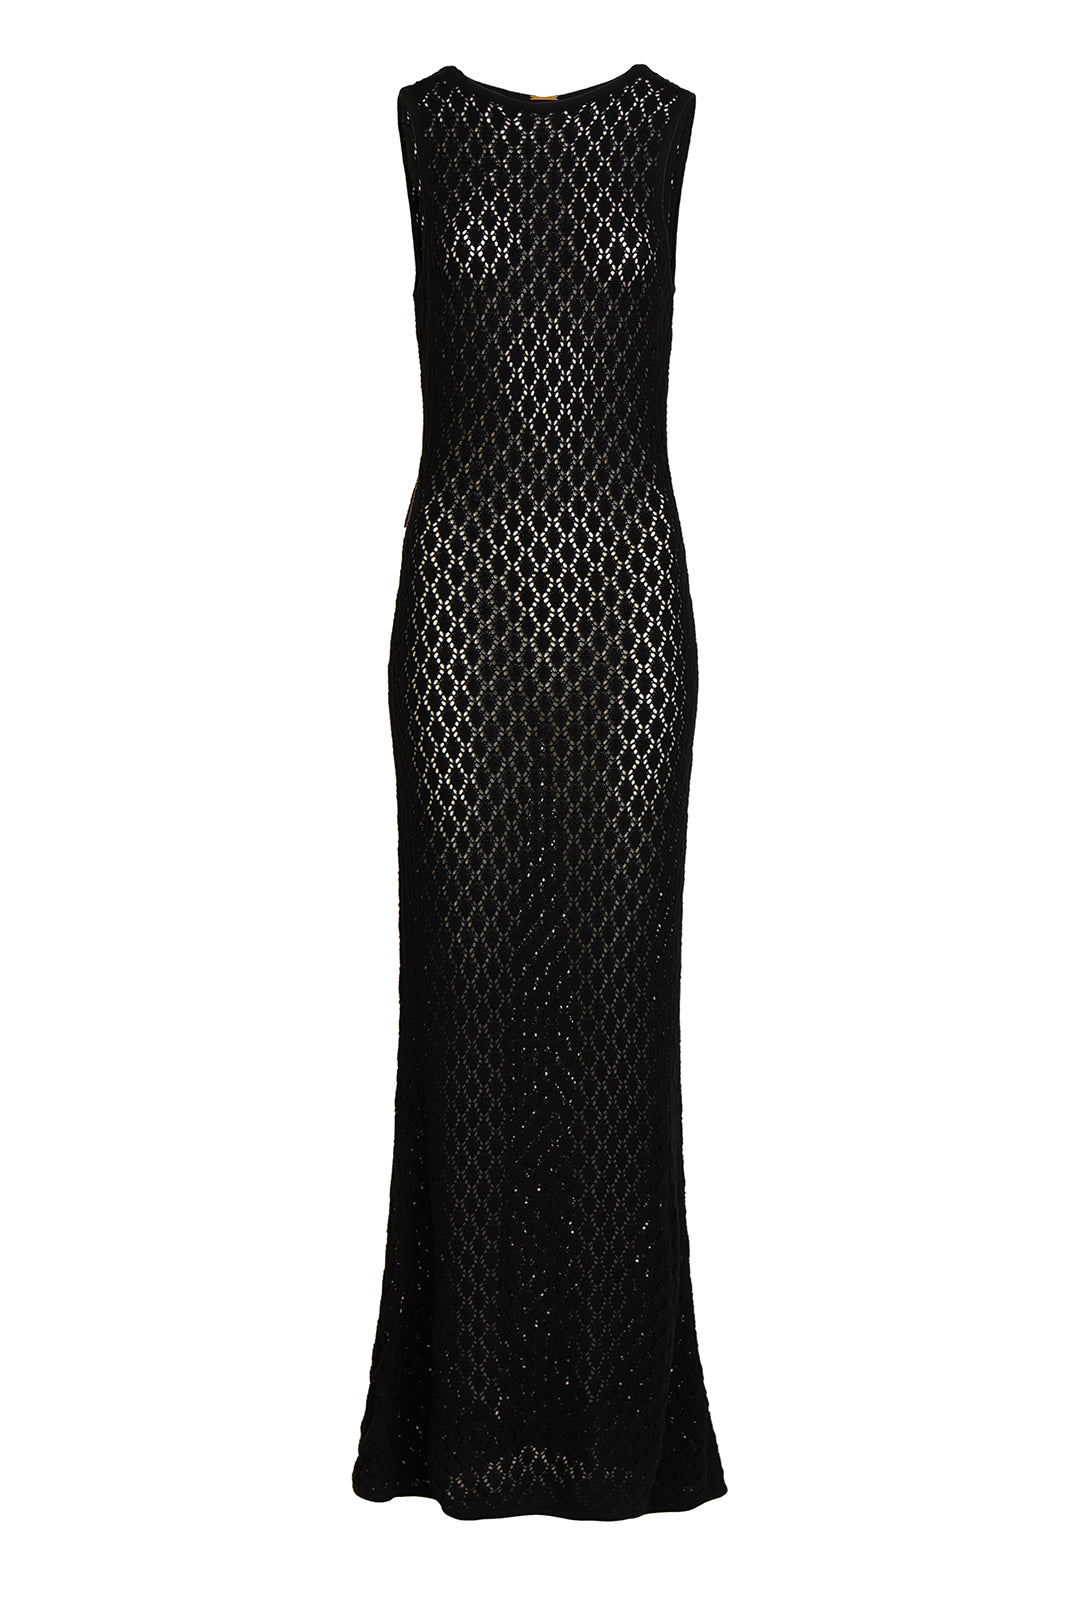 Abaco Crochet Dress - Black